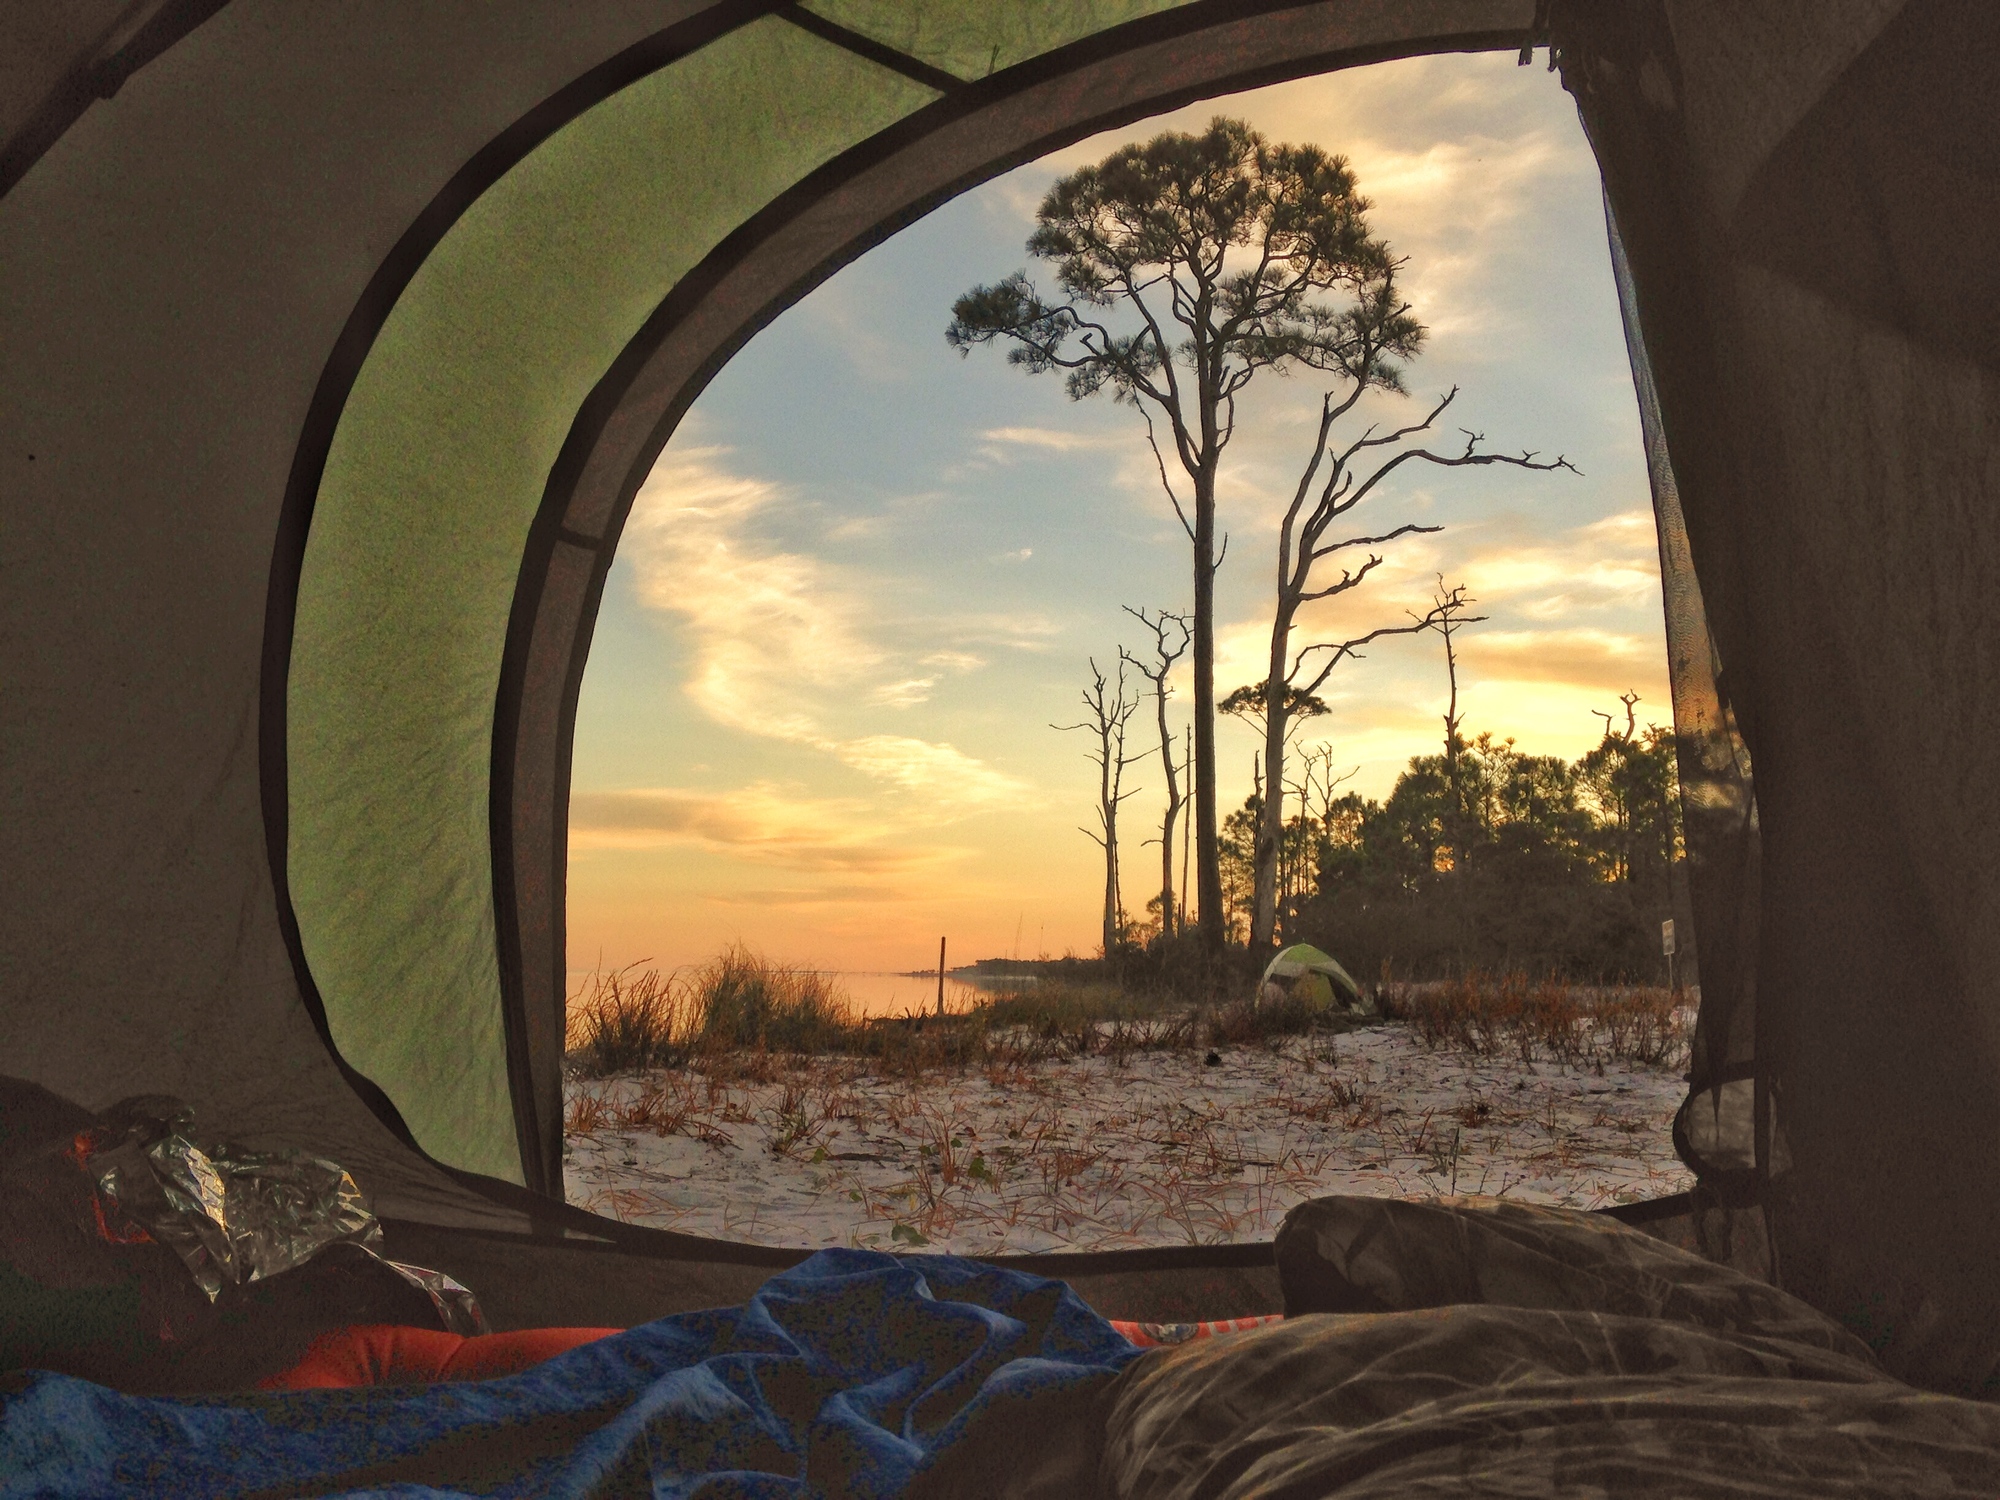 A view on a golden sunrise through a tent along the beach 